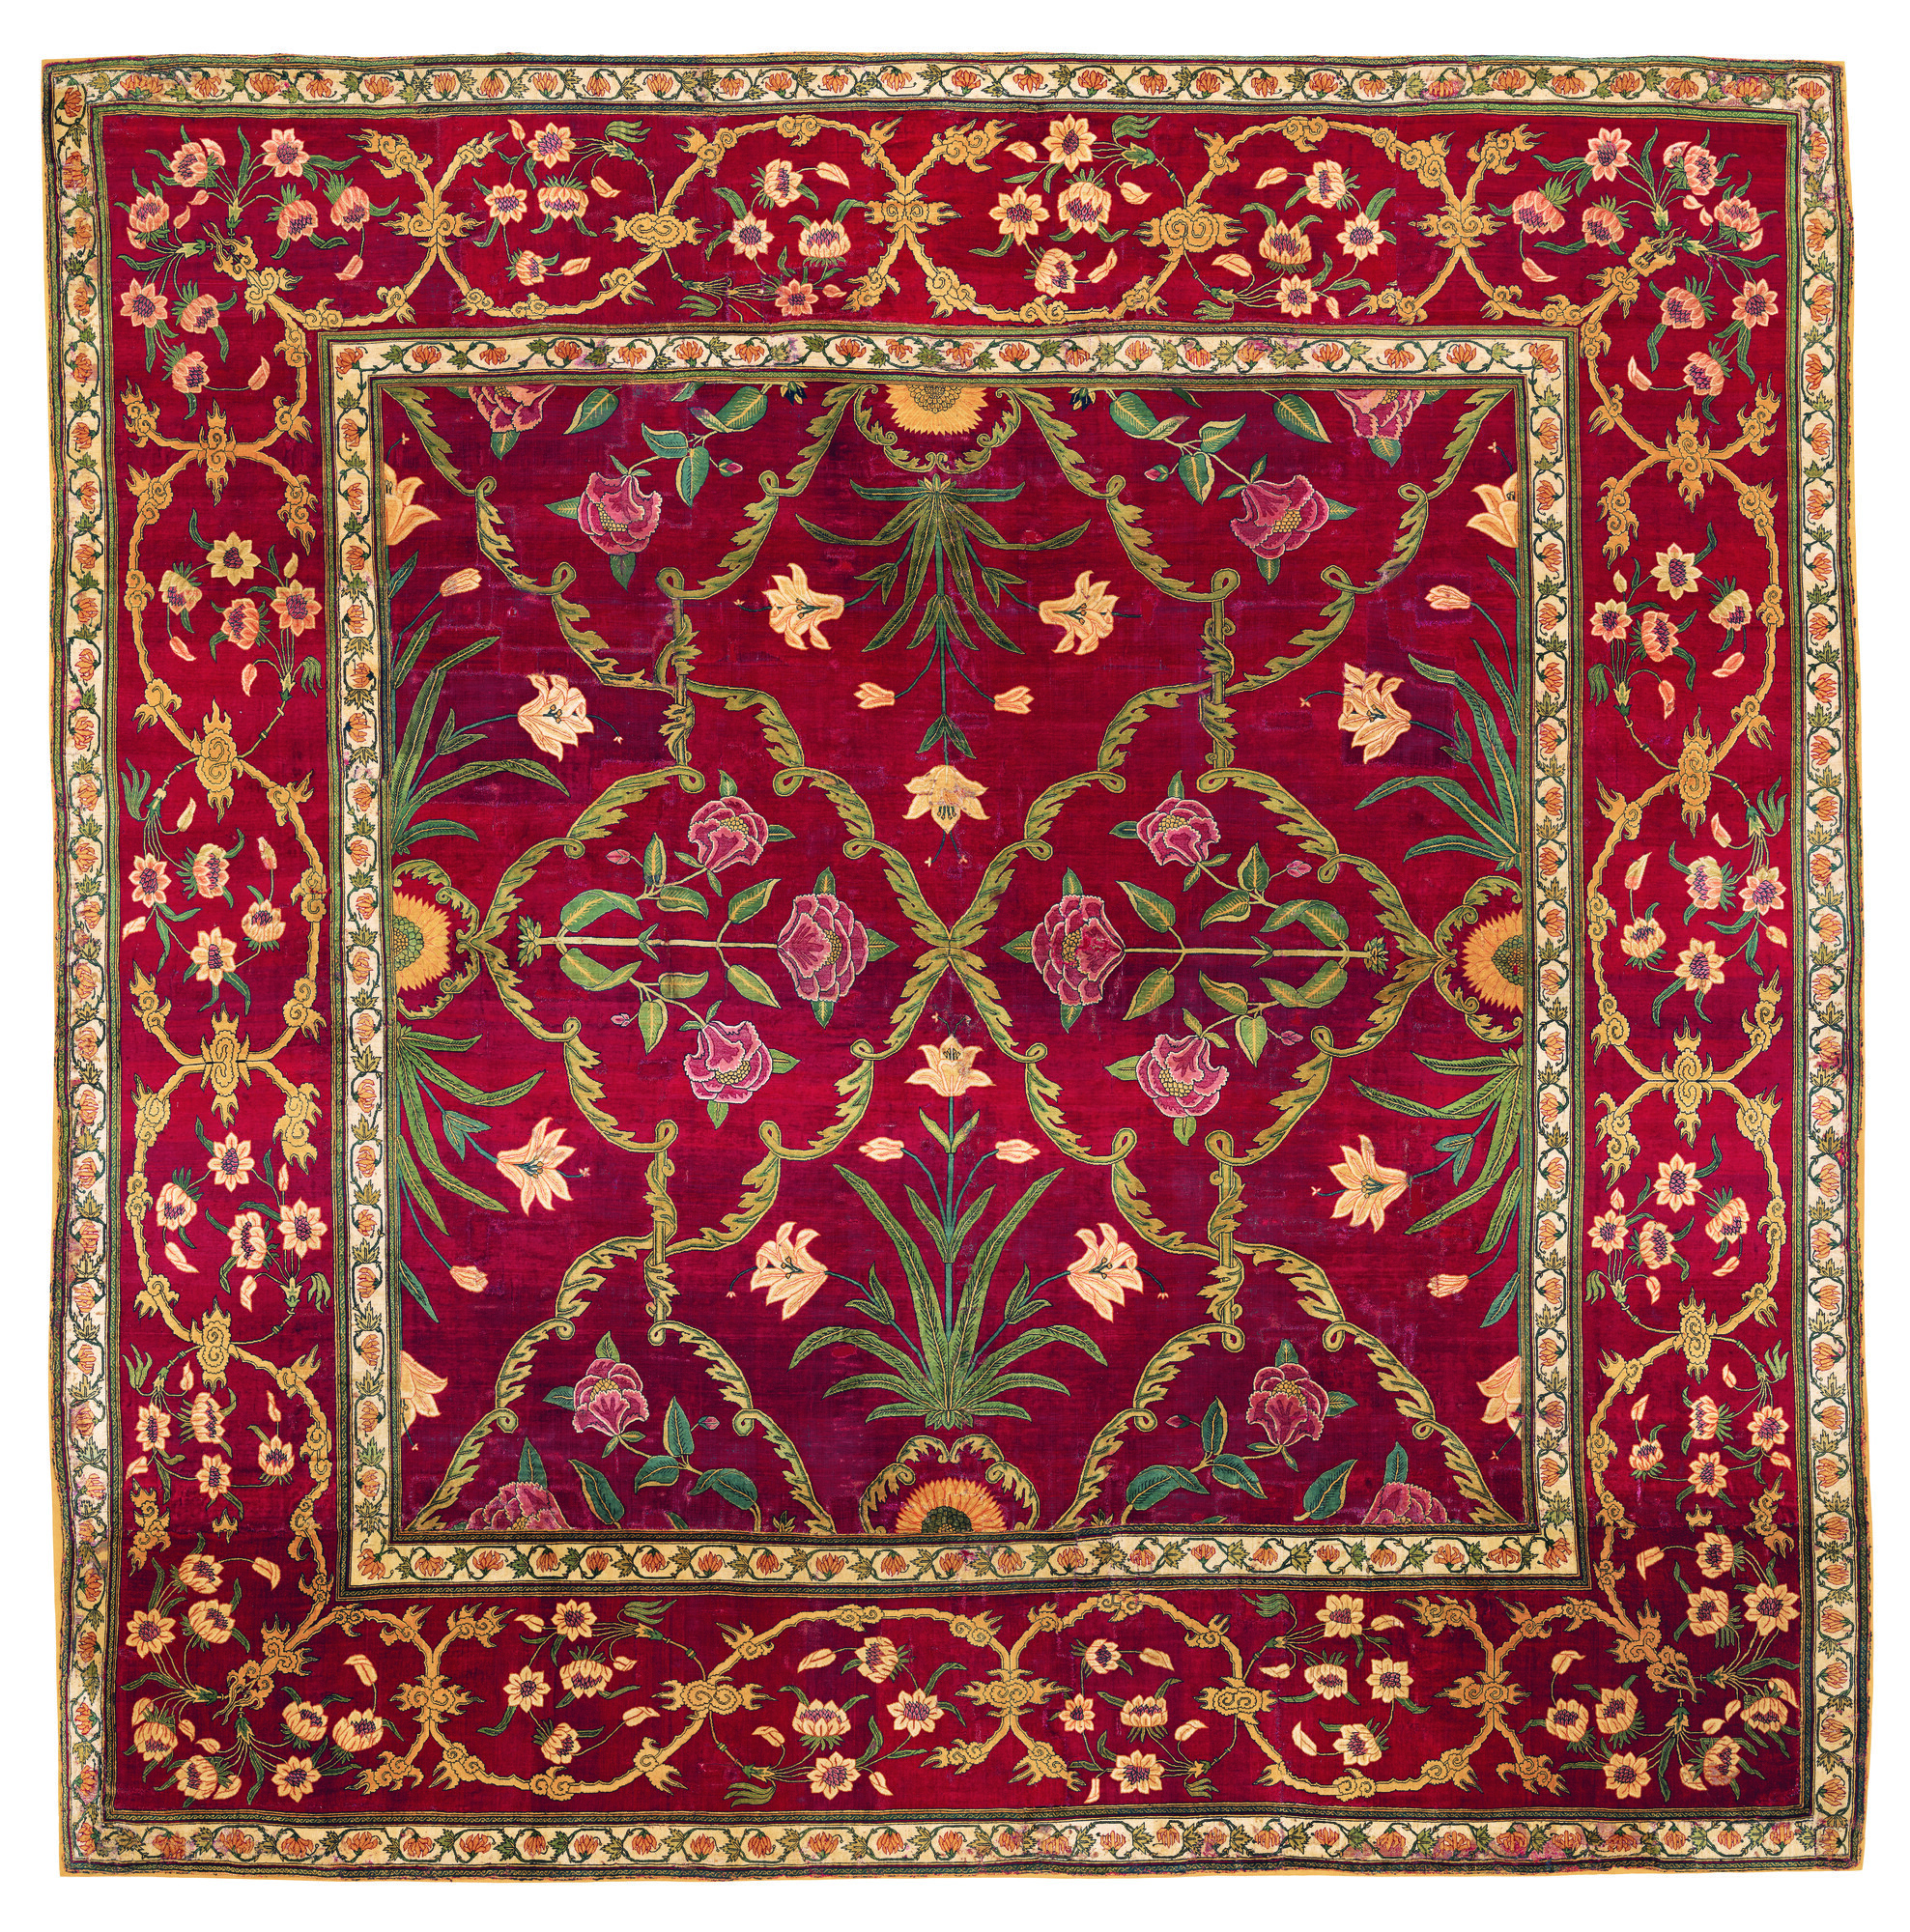 A rare Imperial Mughal Pashmina carpet, Circa 1650